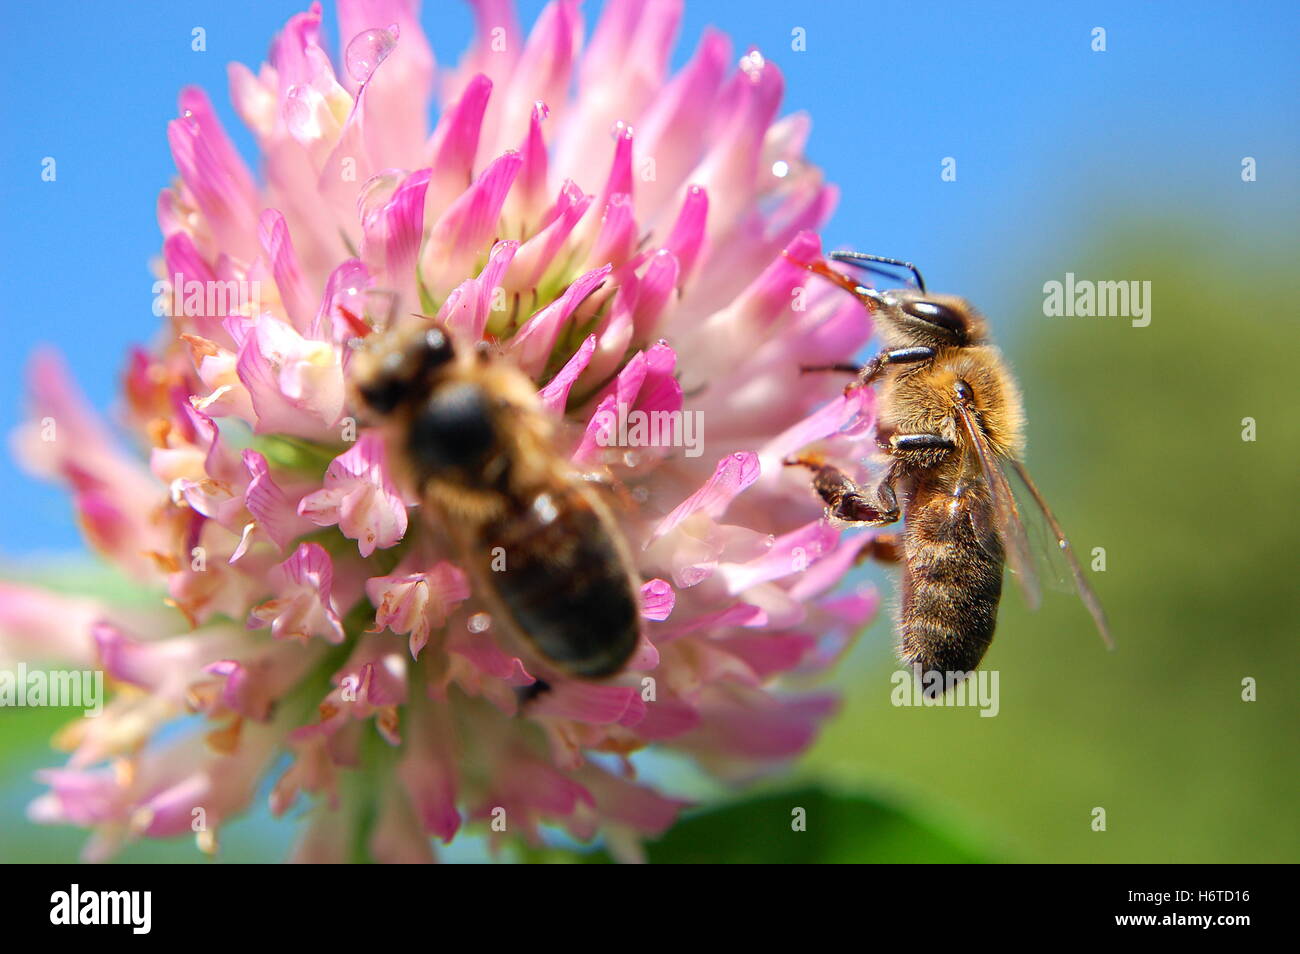 Tier Insekt Blume Pflanze Bienen Klee Wiese Blatt Job Nahaufnahme Garten Flug Tier Insekt Blume Pflanze Landwirtschaft Landwirtschaft Stockfoto